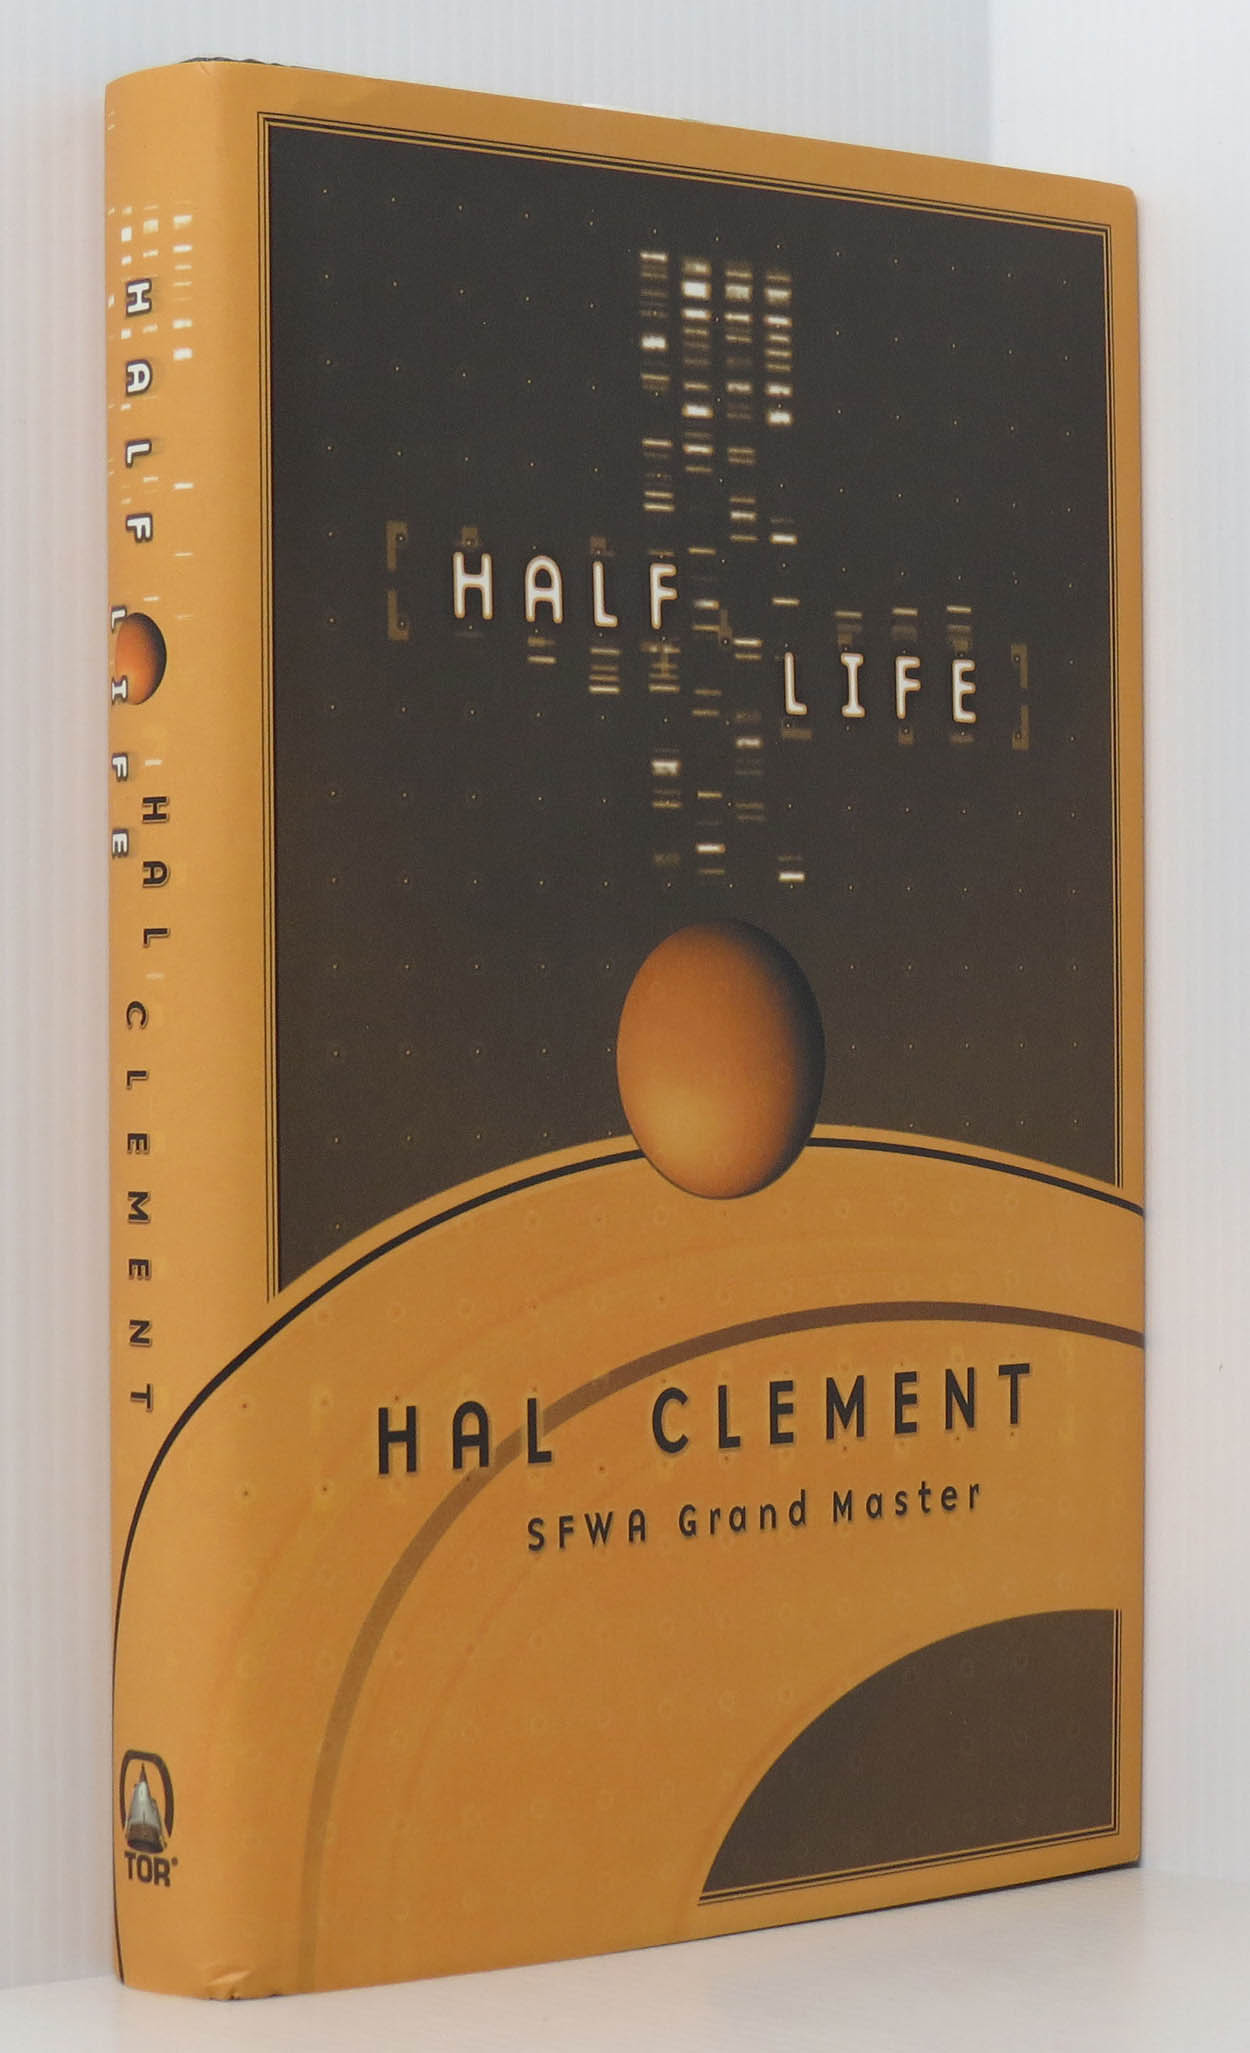 Image for Half Life